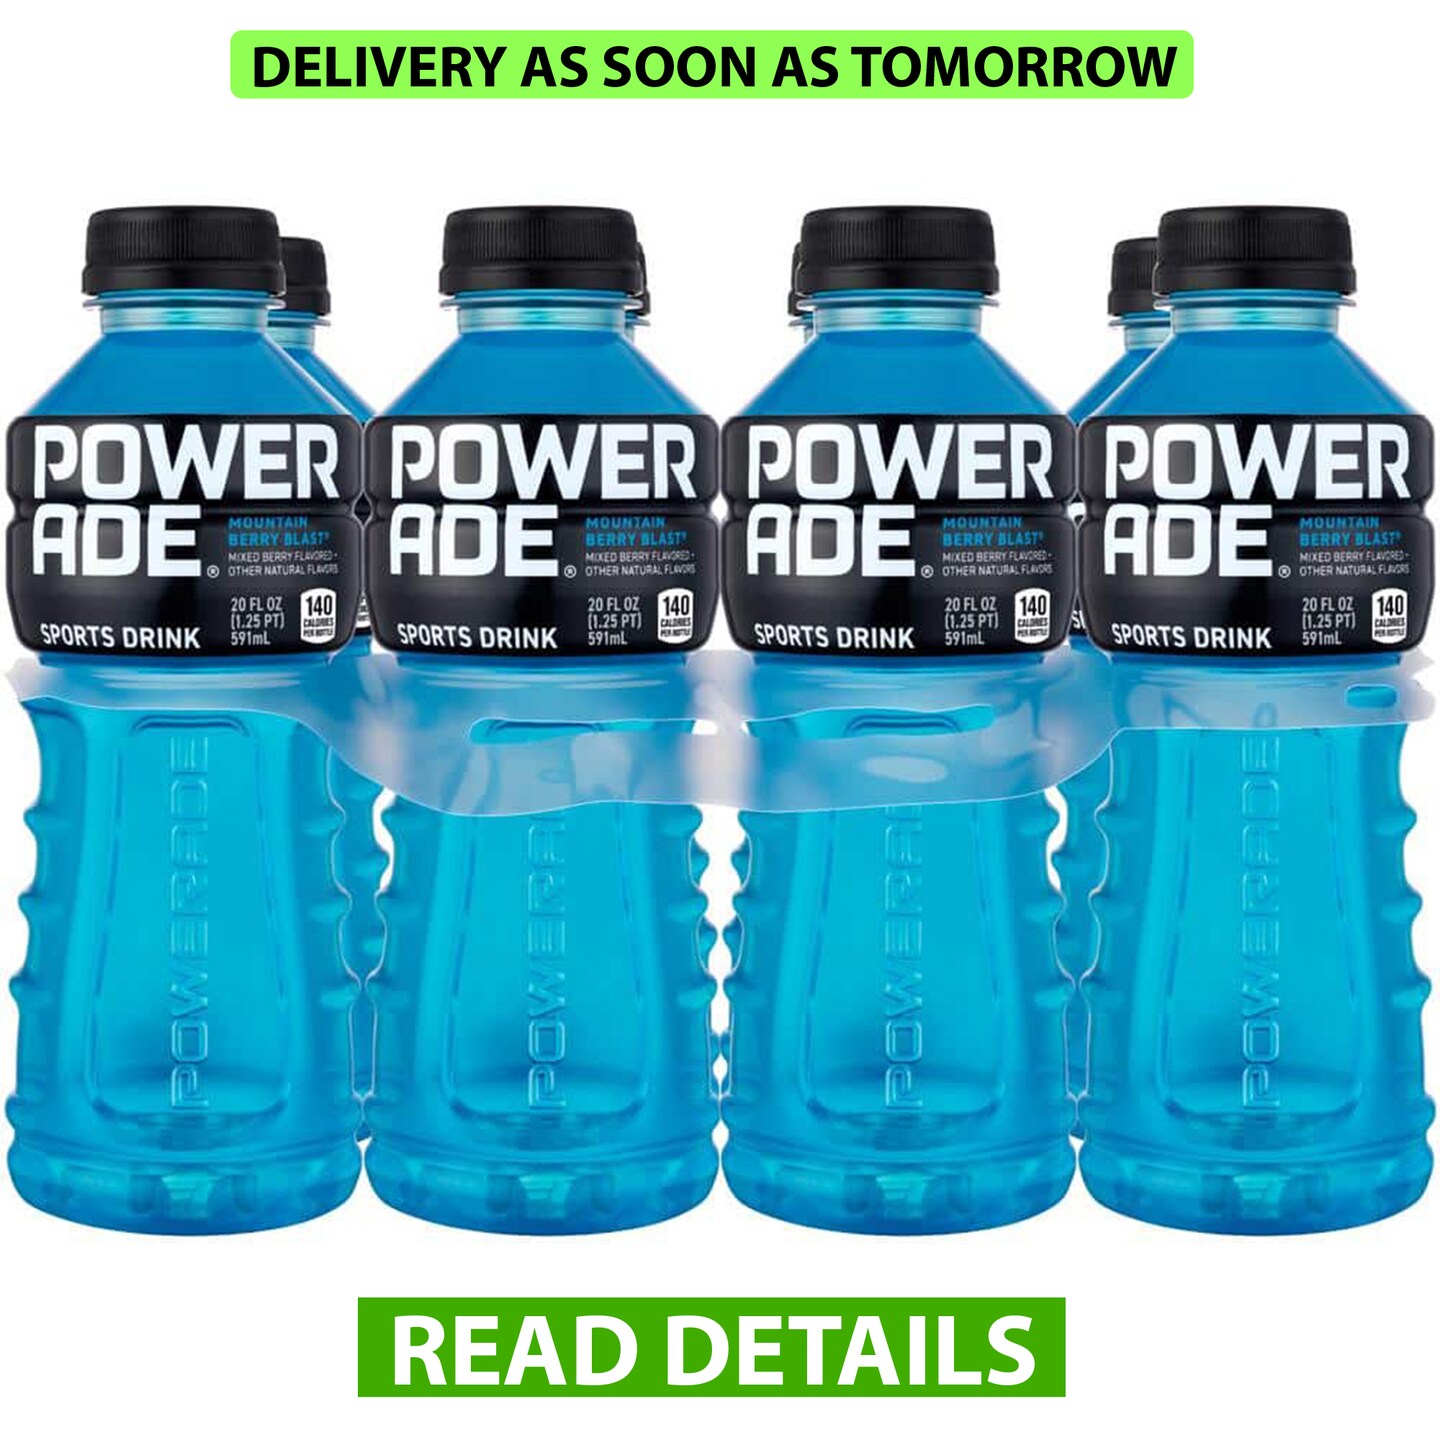 Powerade POWERADE Grape Bottles, 20 fl. oz., 8 Pack 049000047134 - The Home  Depot